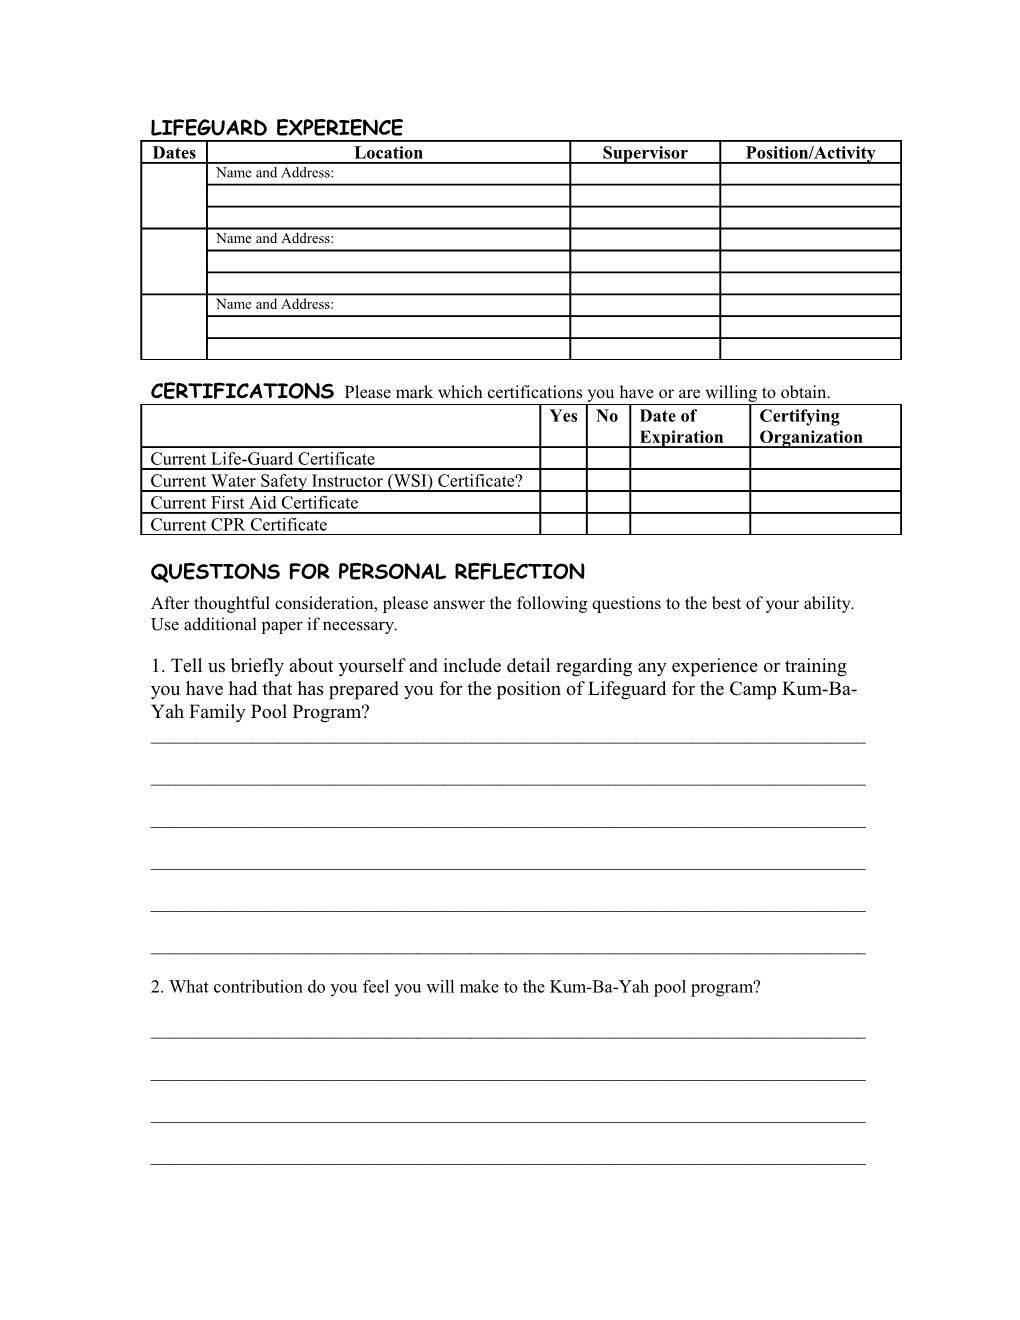 Lifeguard Application 4415 Boonsboro Rd